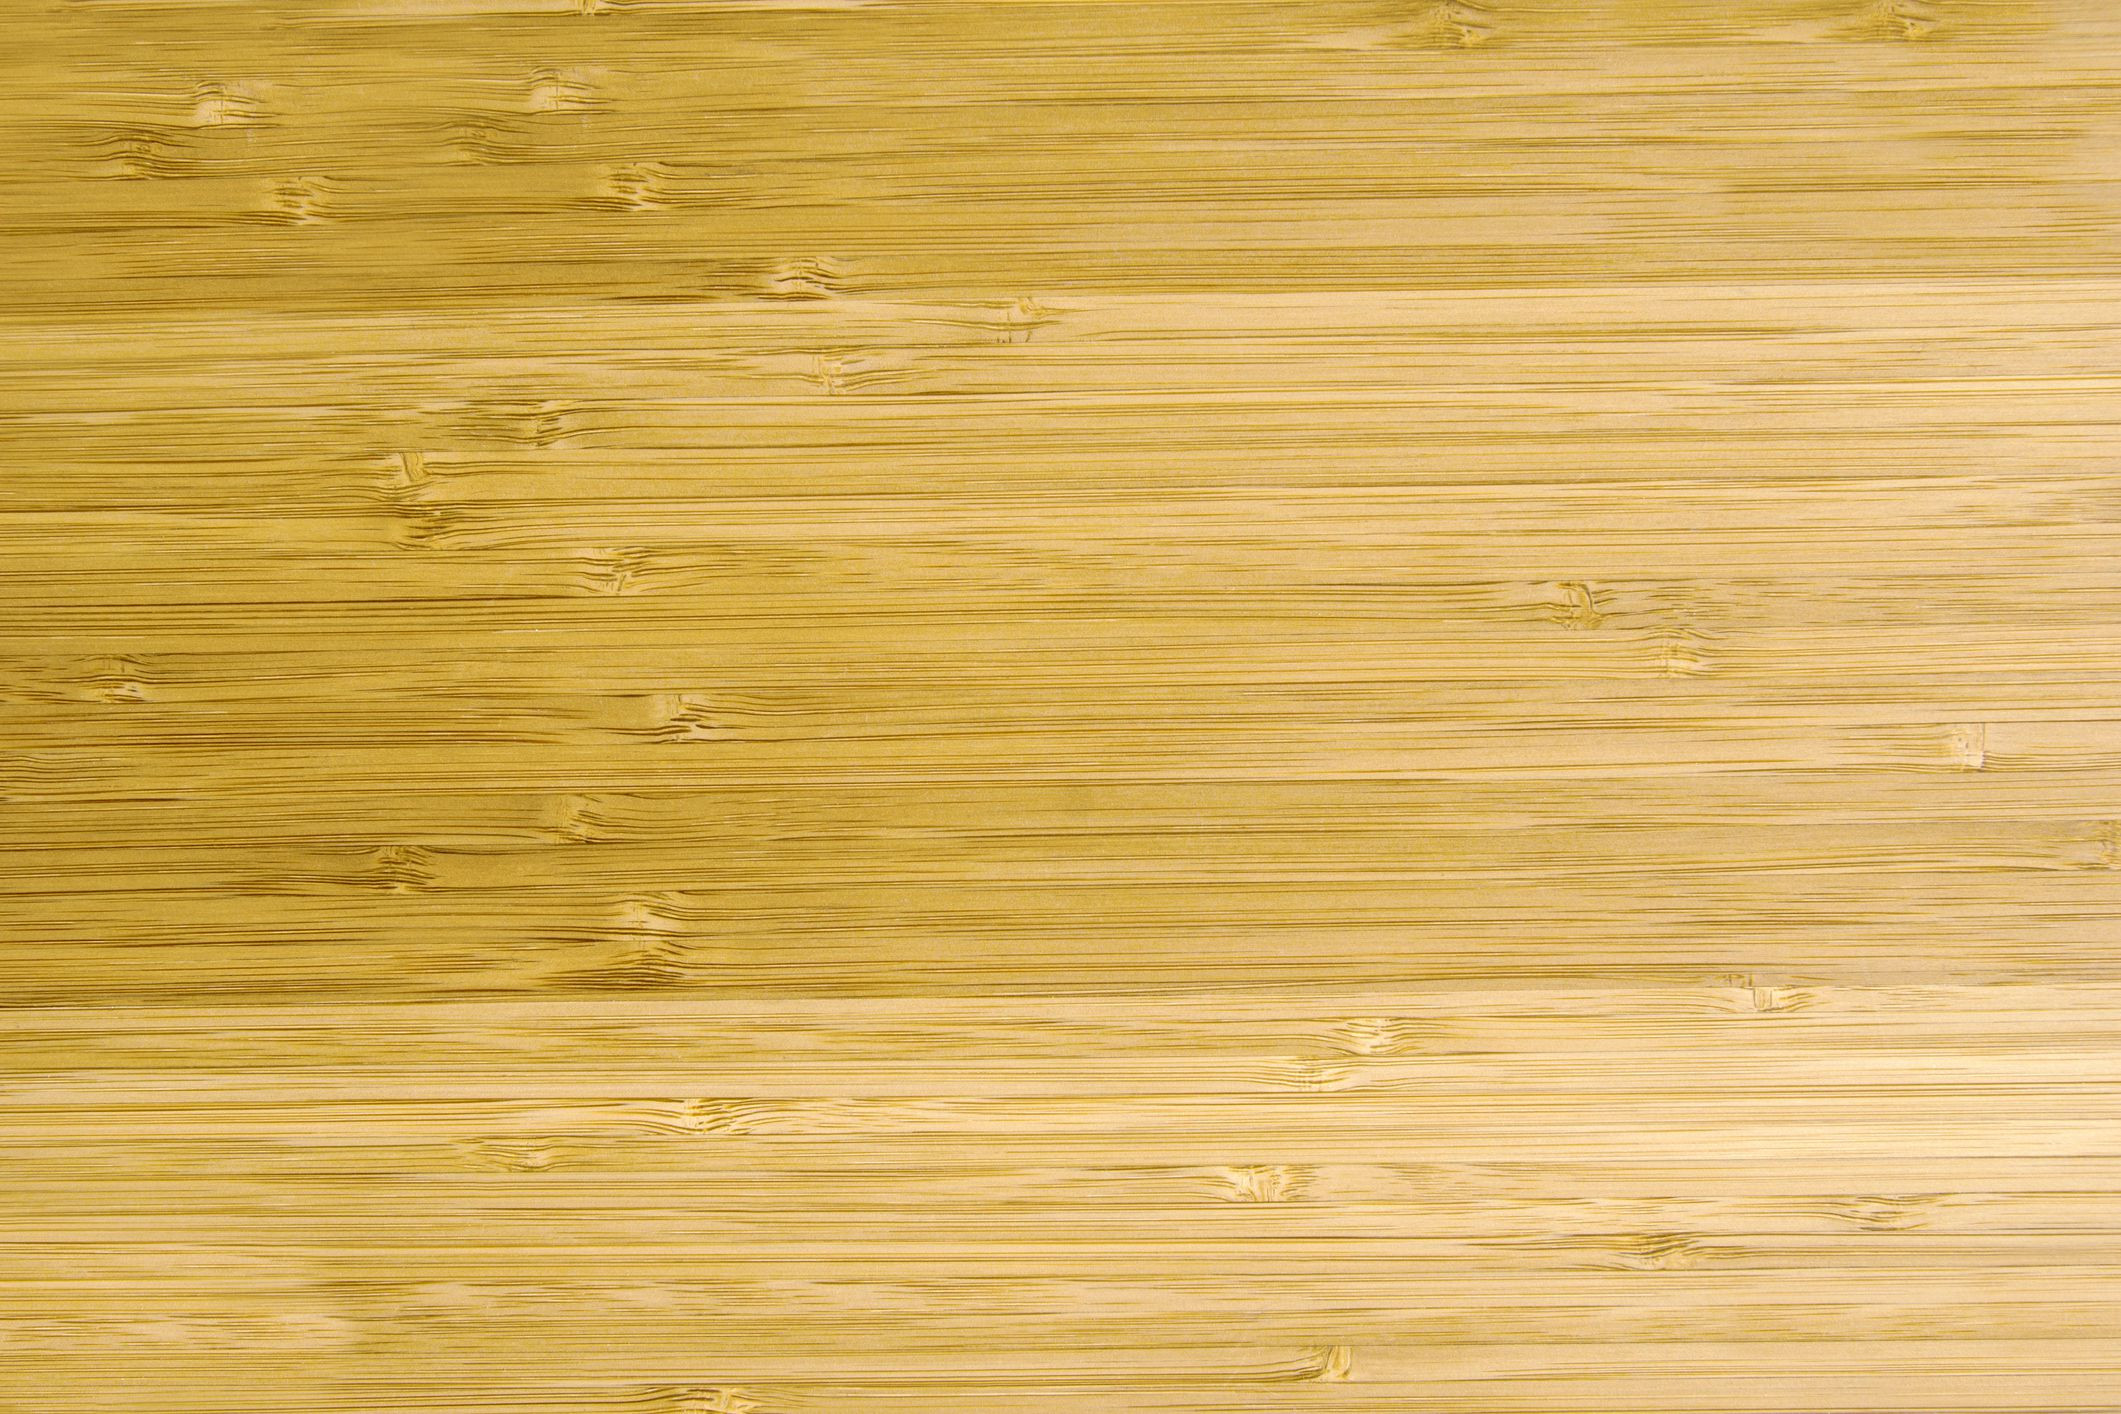 Lowes Parquet Hardwood Flooring Of 5 Best Bamboo Floors Regarding Bamboo Board 175428713 581a20835f9b581c0b953203